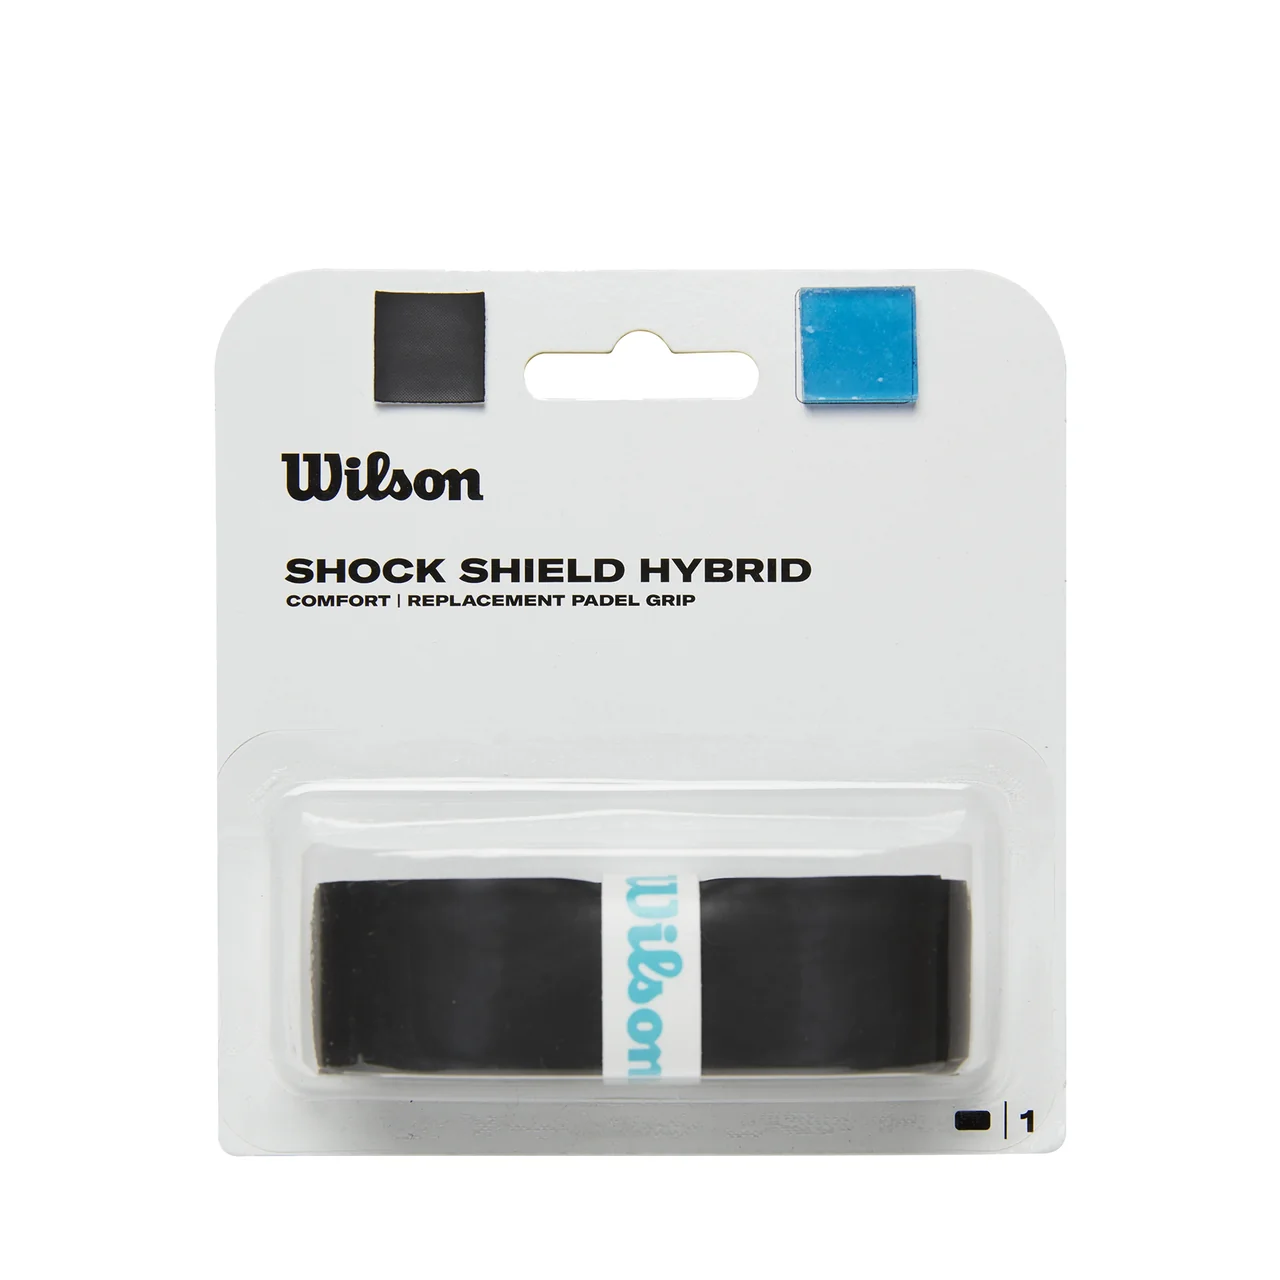 Wilson Shock Shield Hybrid Replacement Padel Grip Black